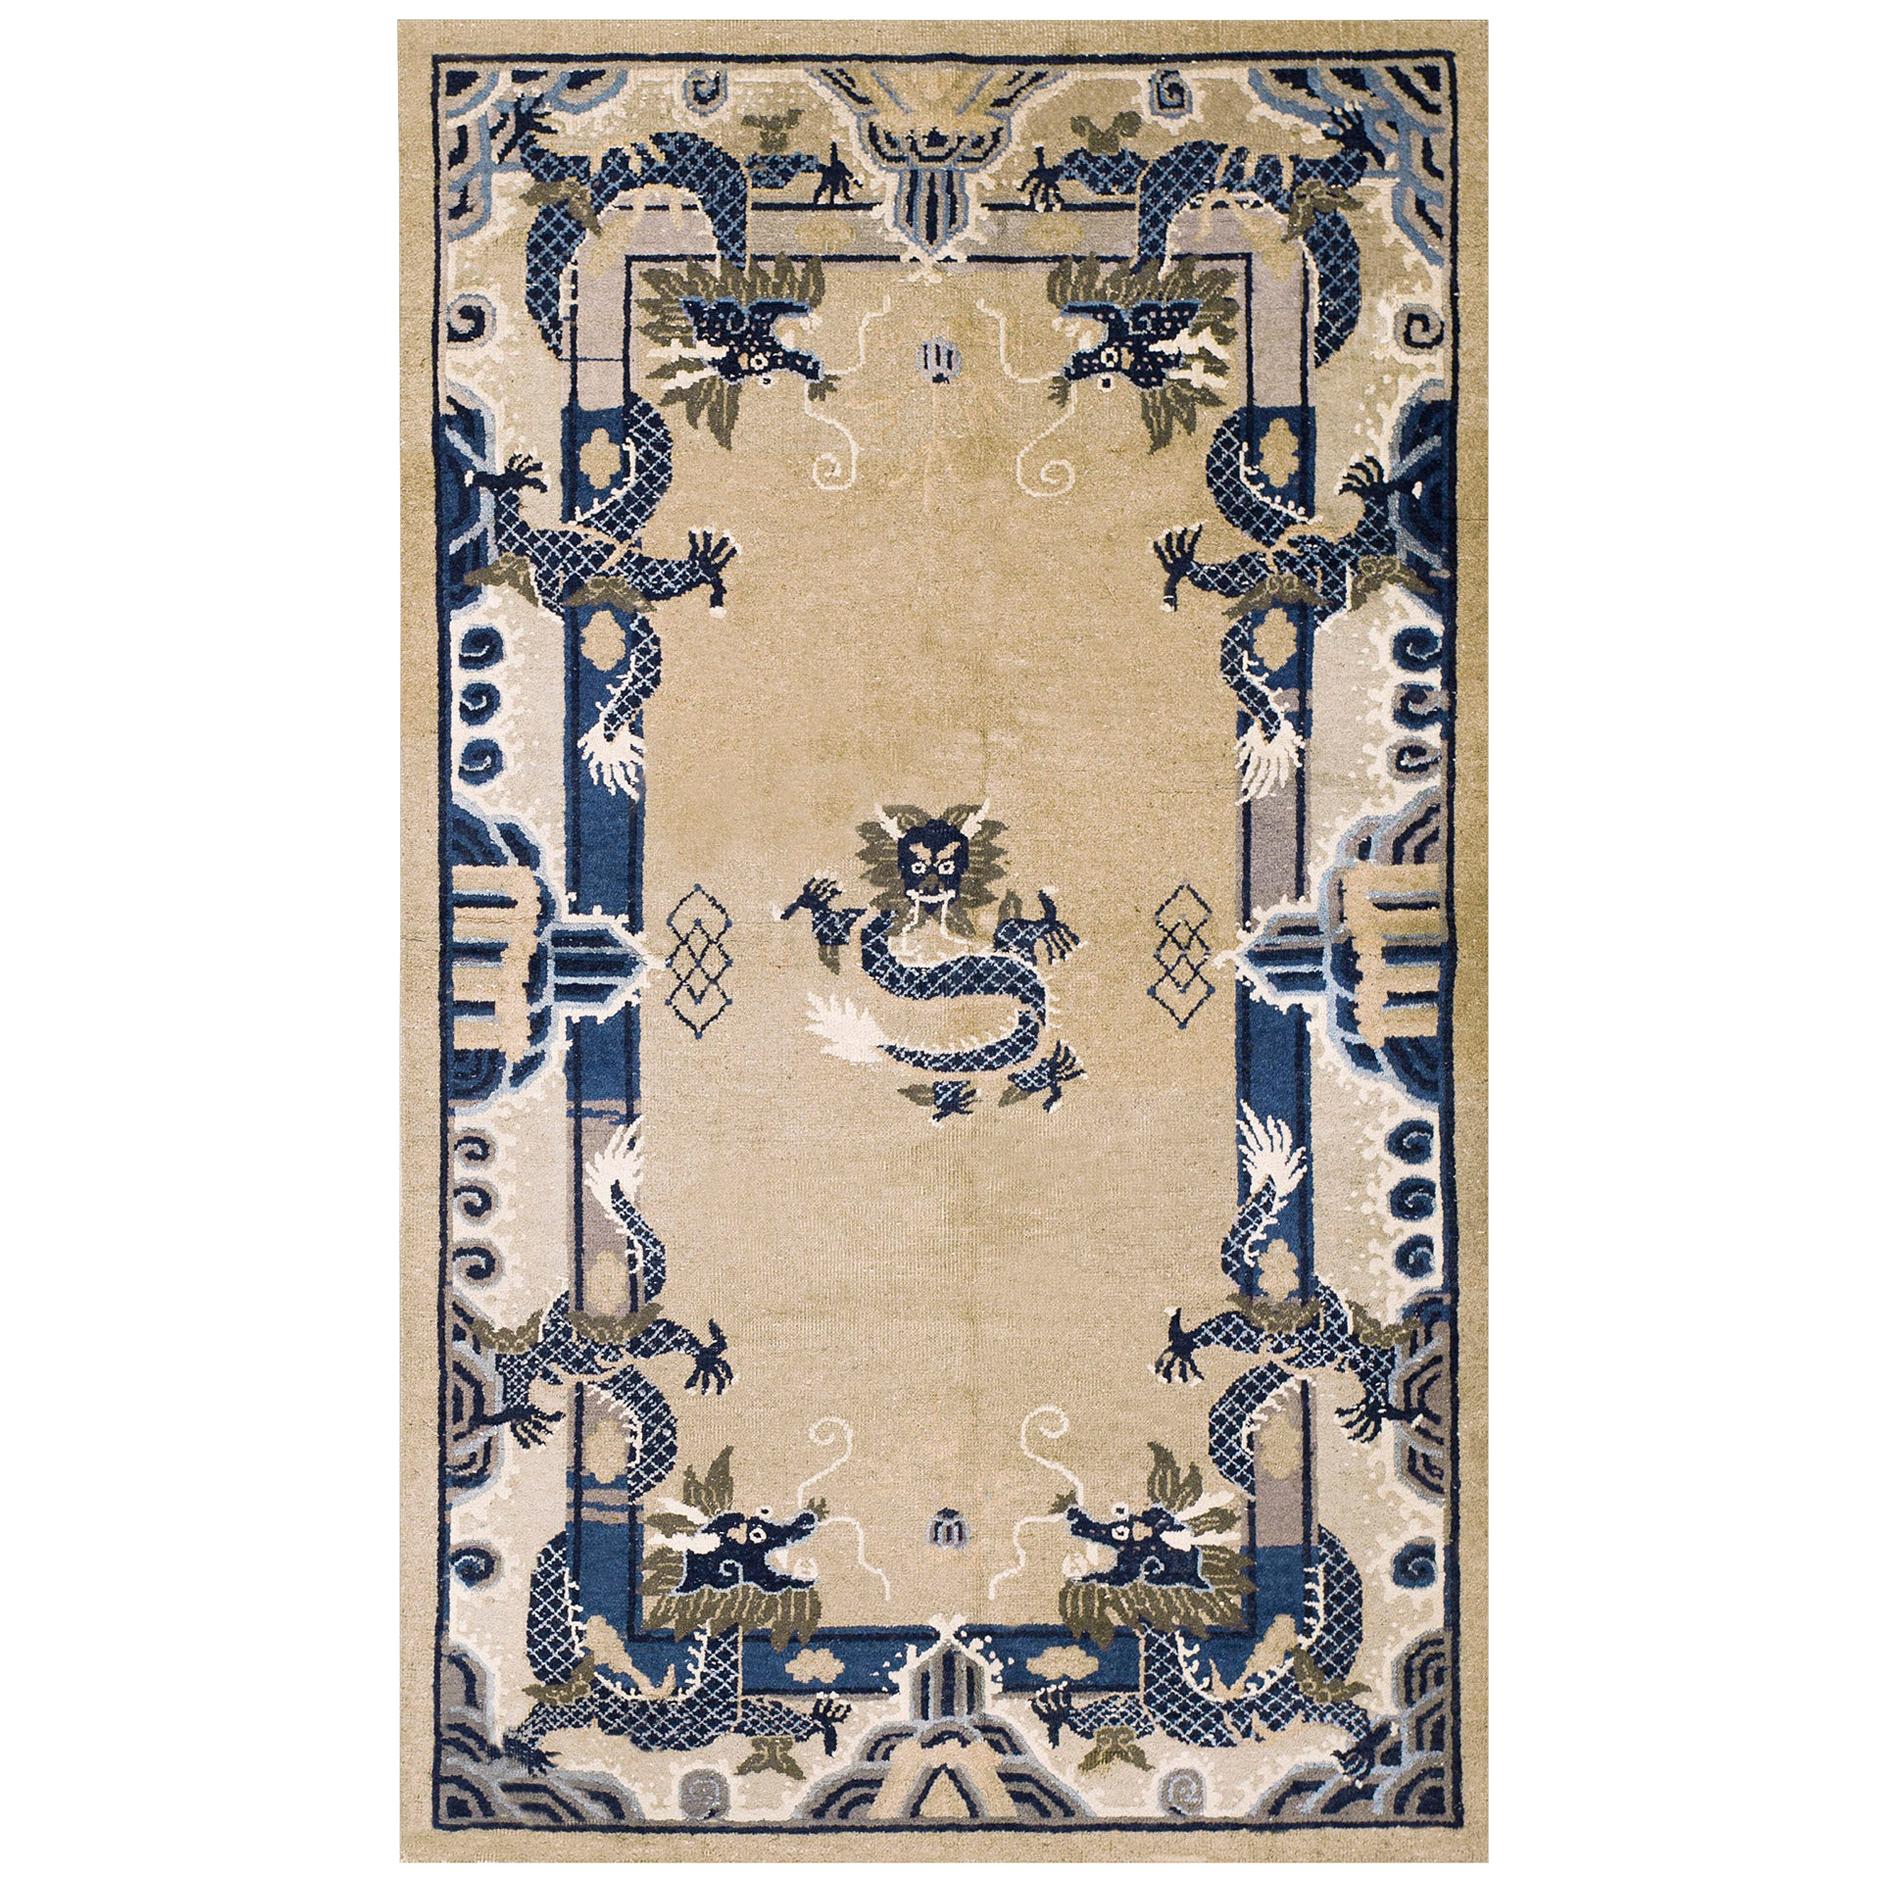 Early 20th Century Chinese Peking Dragon Carpet ( 4' x 6'10" - 122 x 208 )